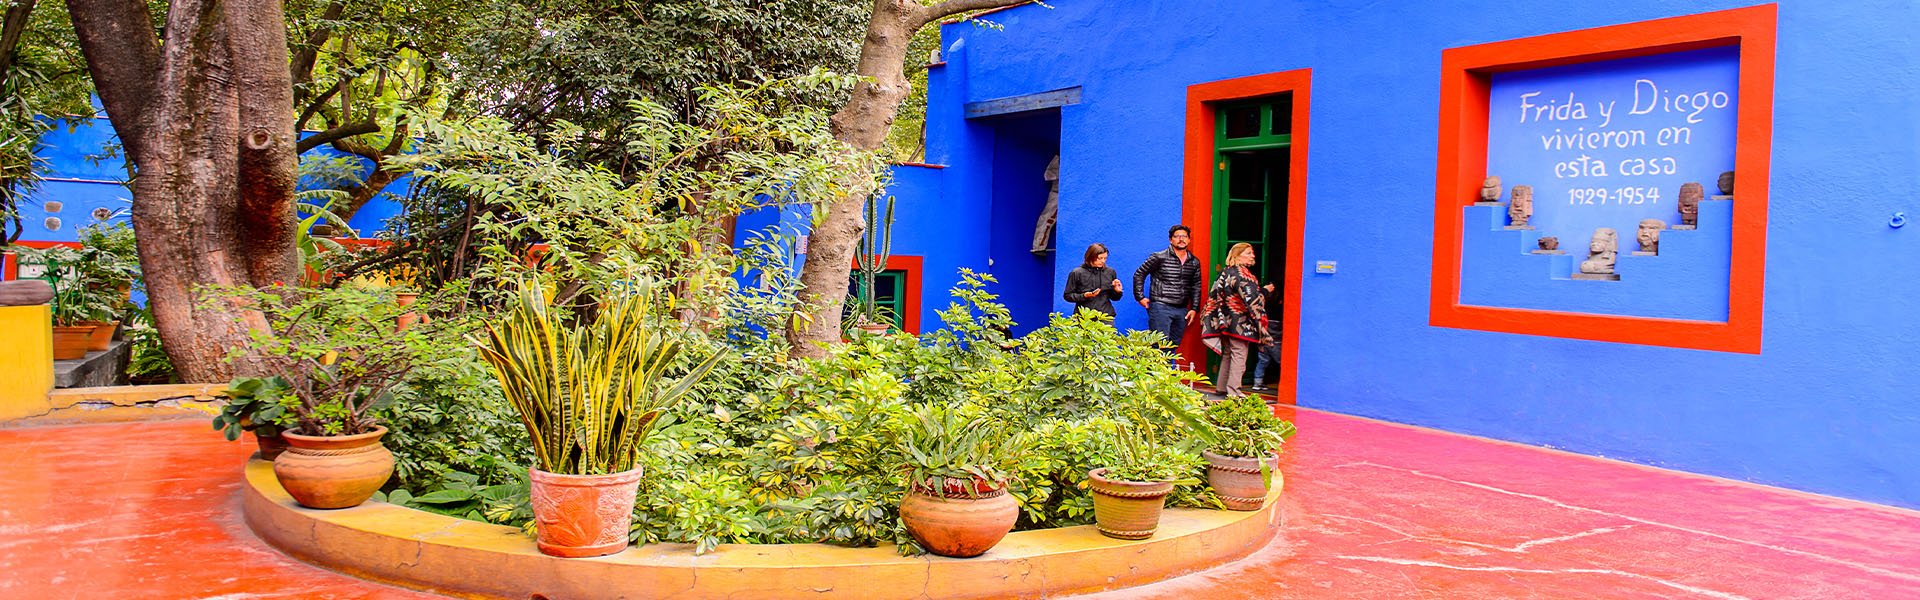 Frida La Mexicana | South America Tourism Office